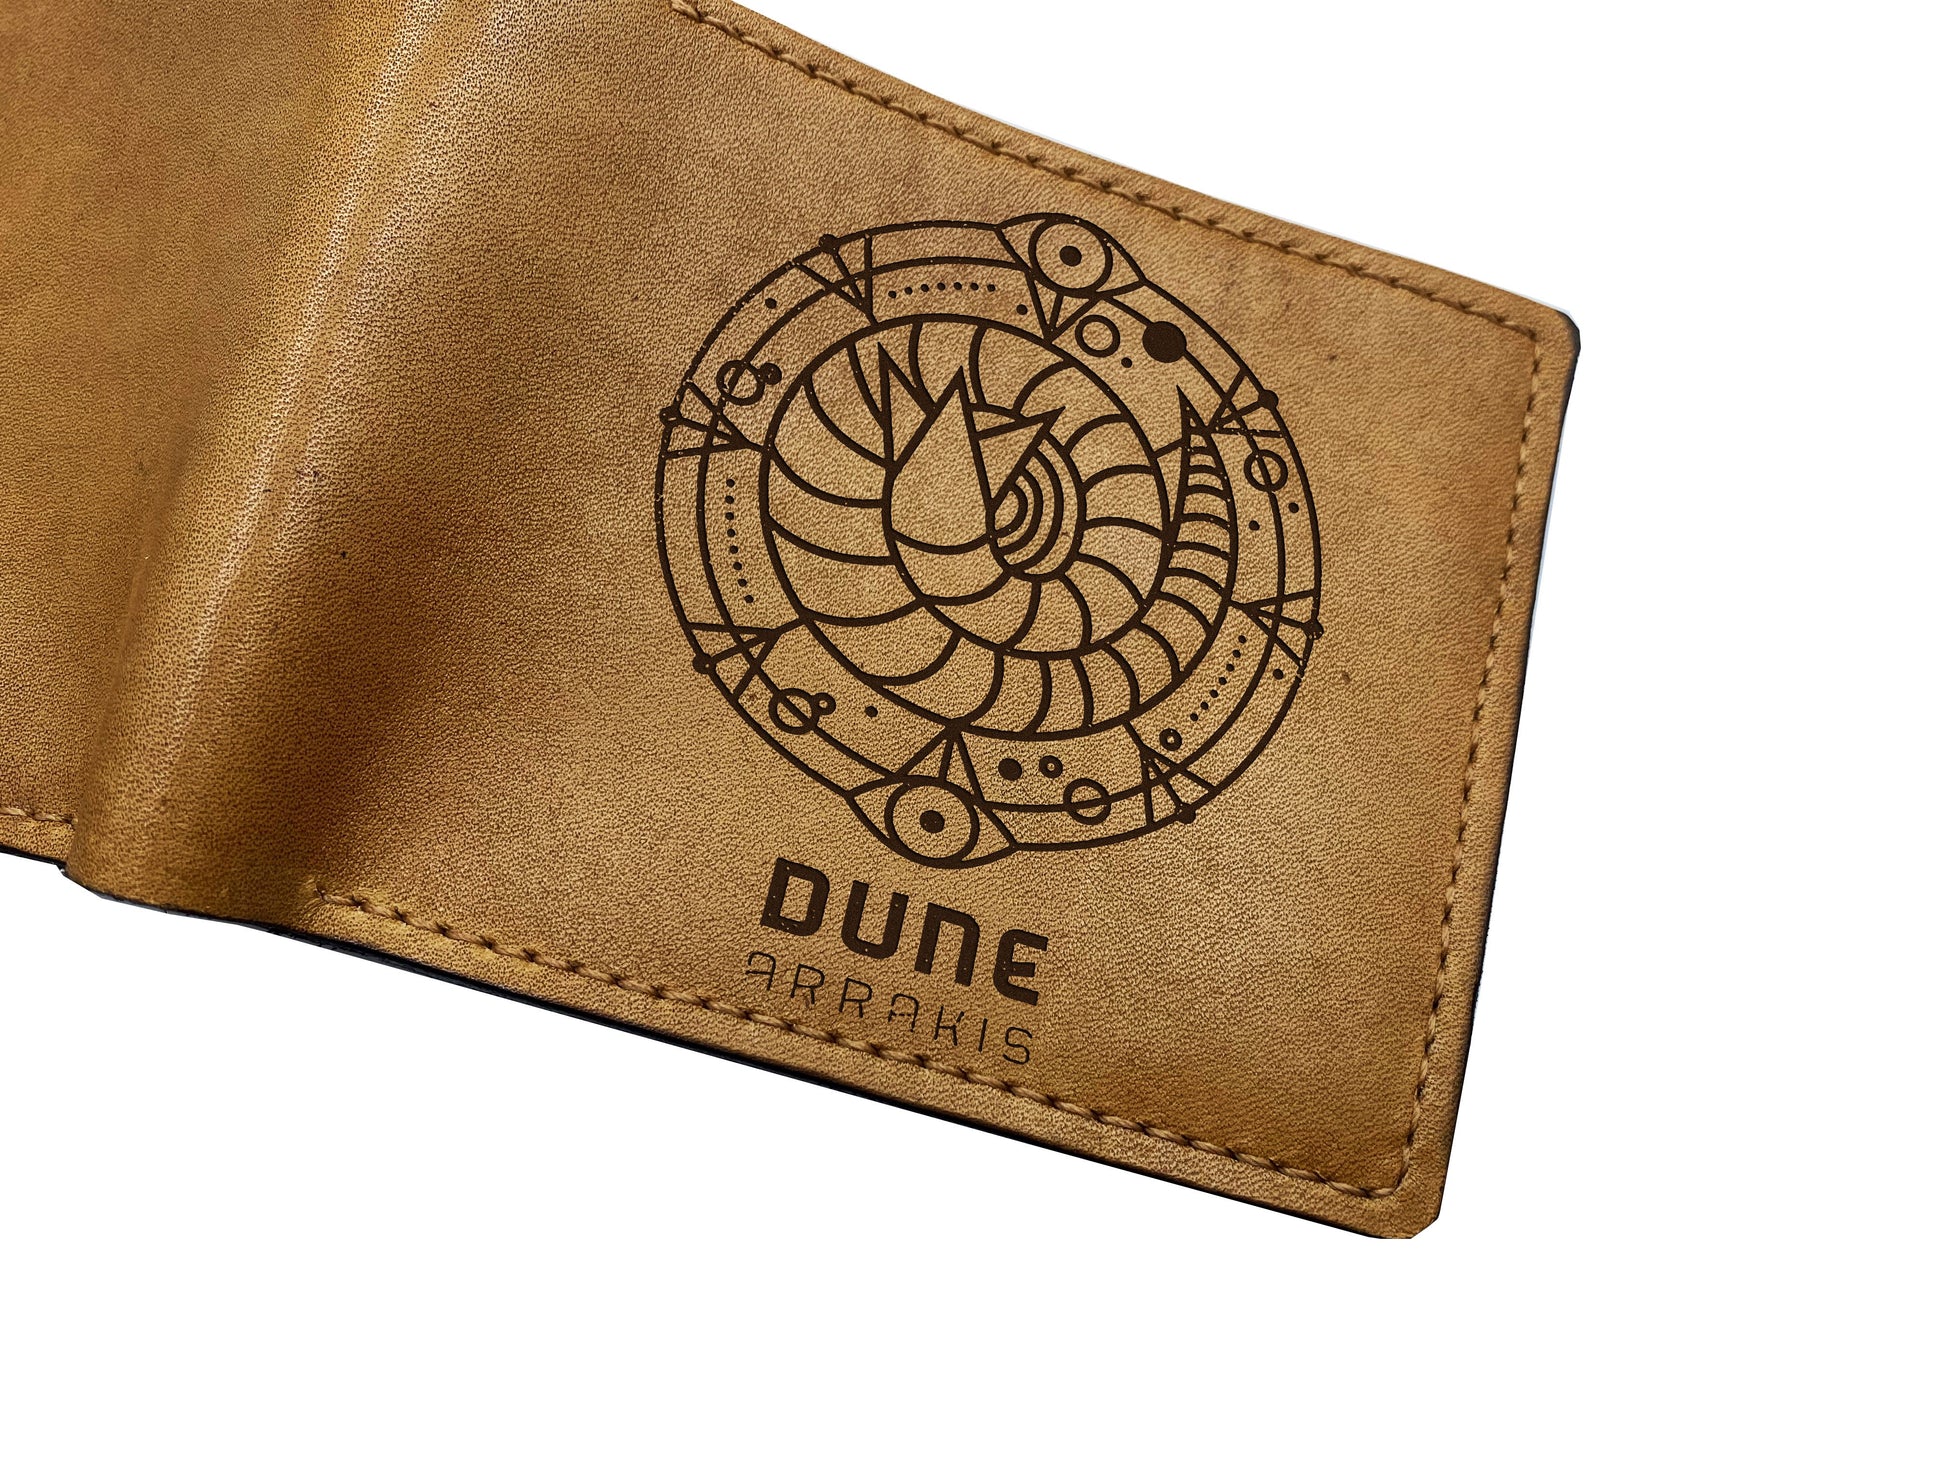 Dune symbol customized leather men's wallet, shai-hulud sandworm leather present for men